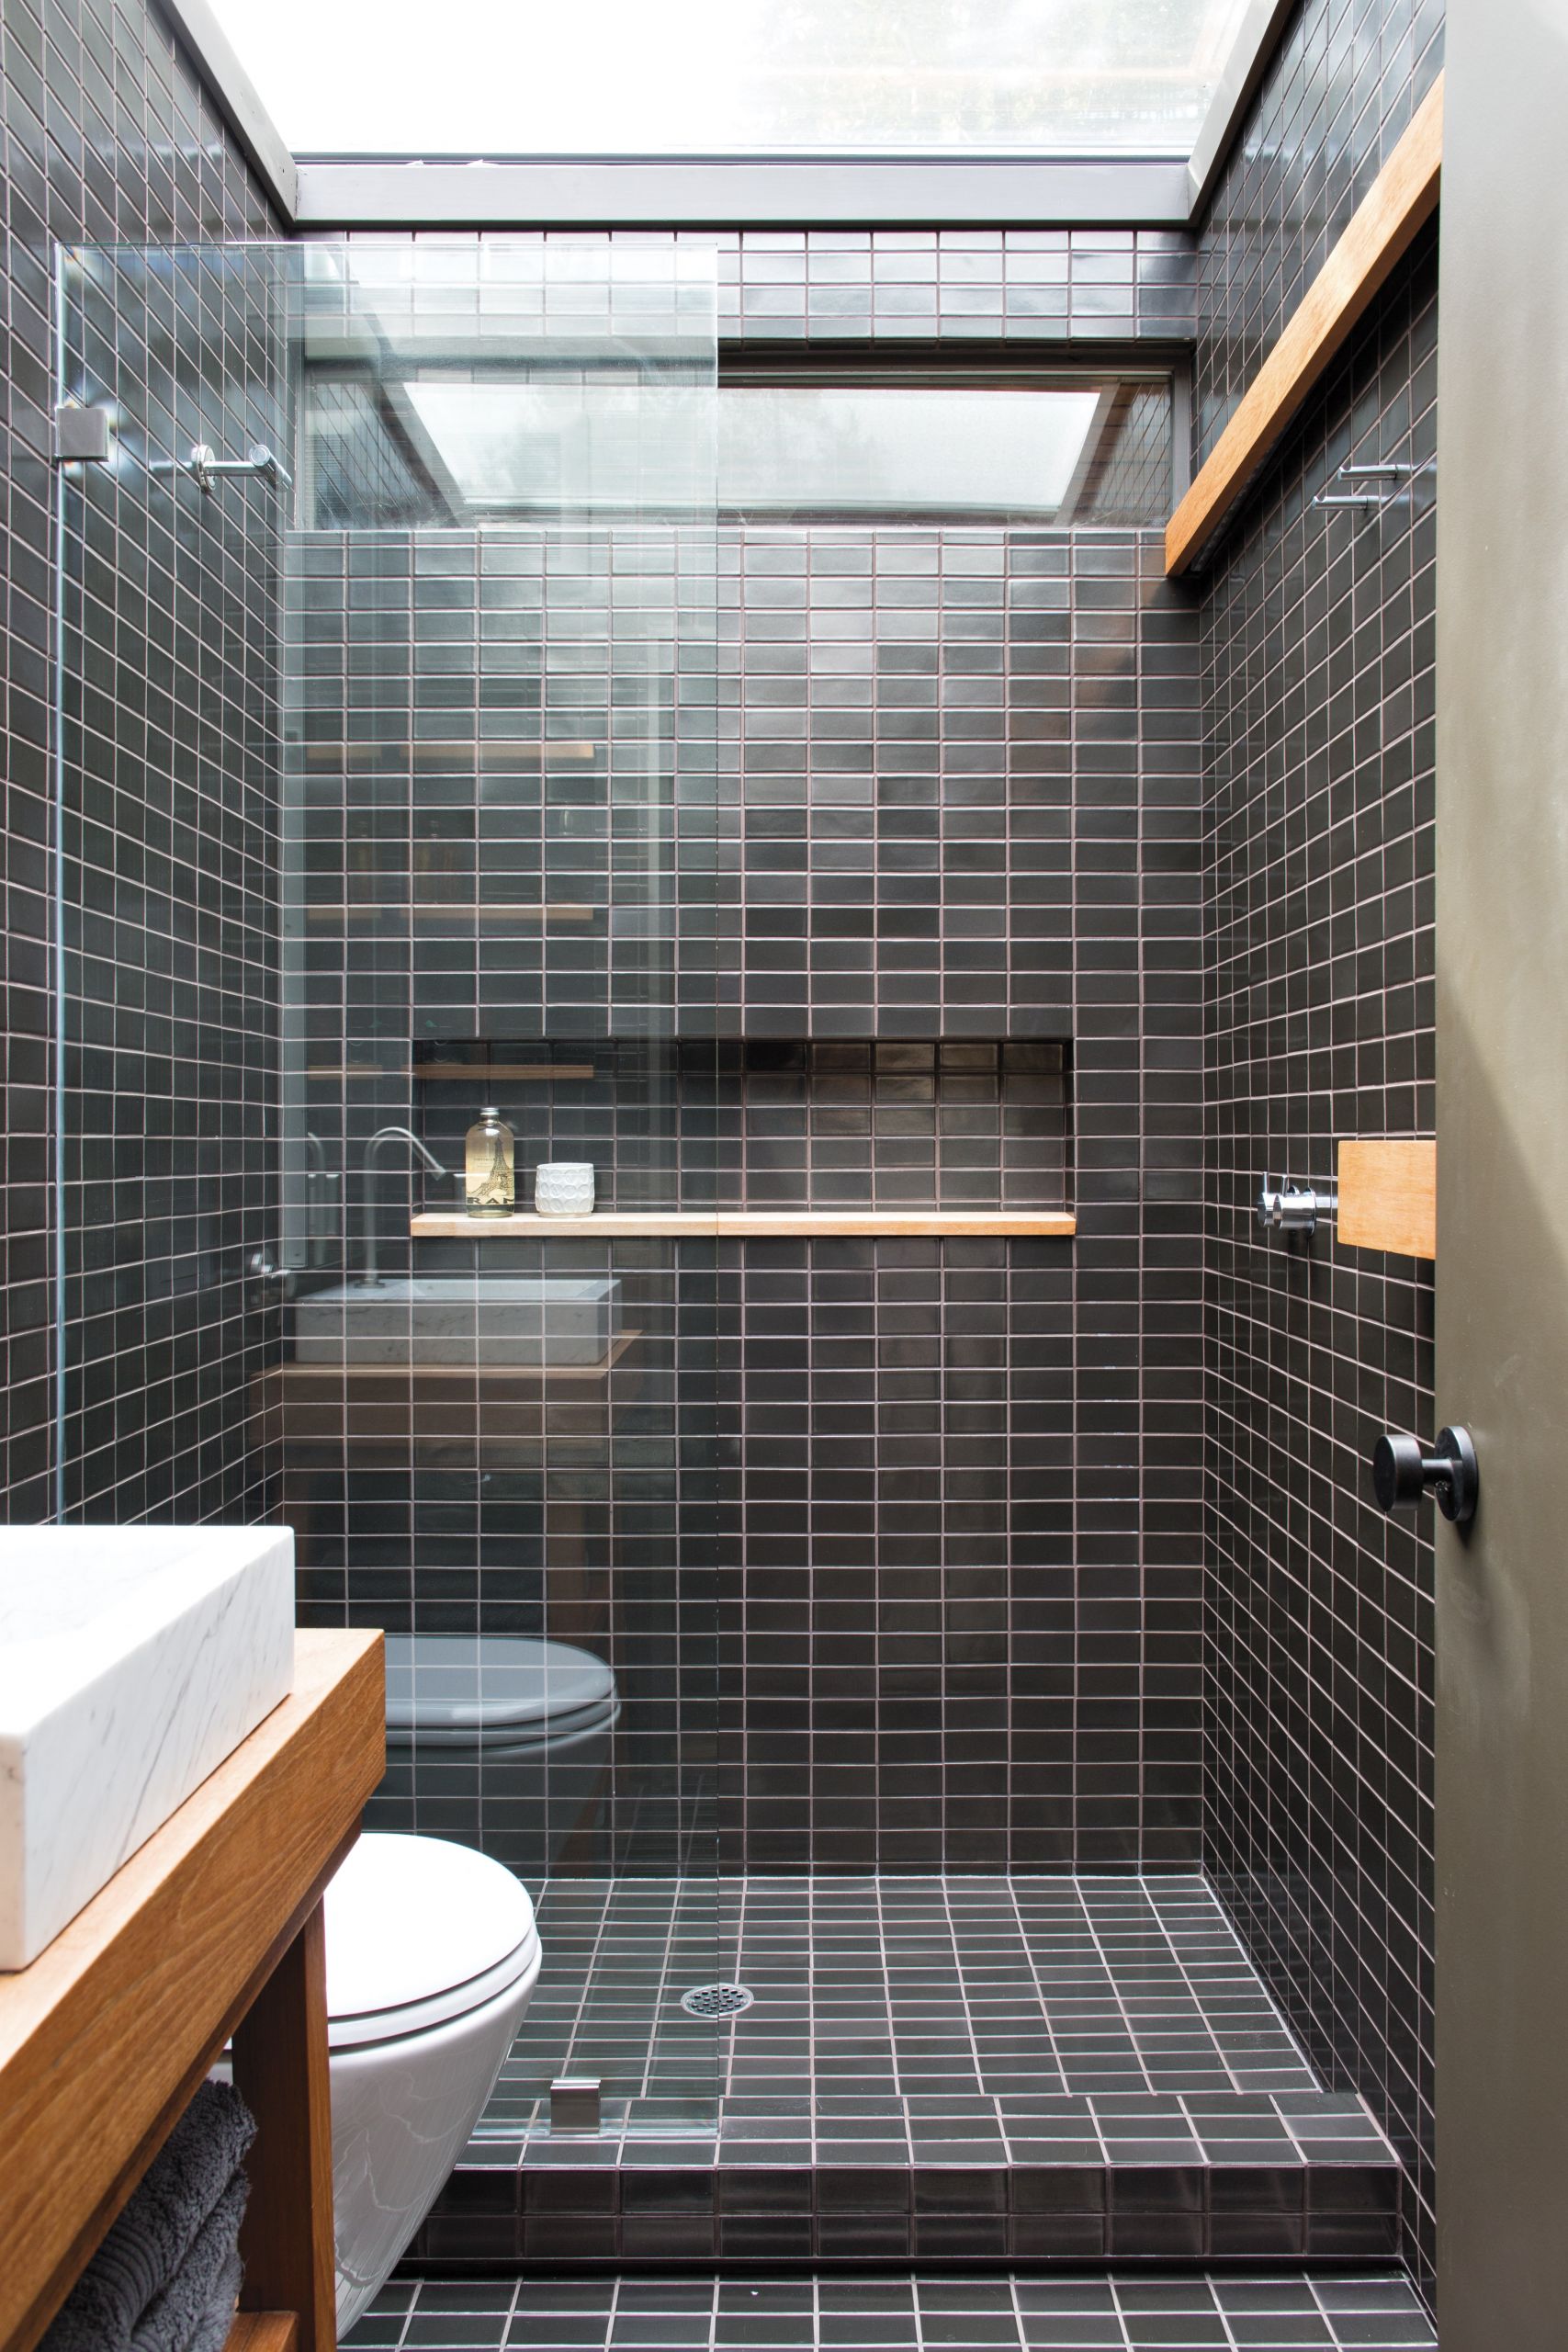 Bathroom Tile Design
 How to Create the Bathroom Tile Design of Your Dreams